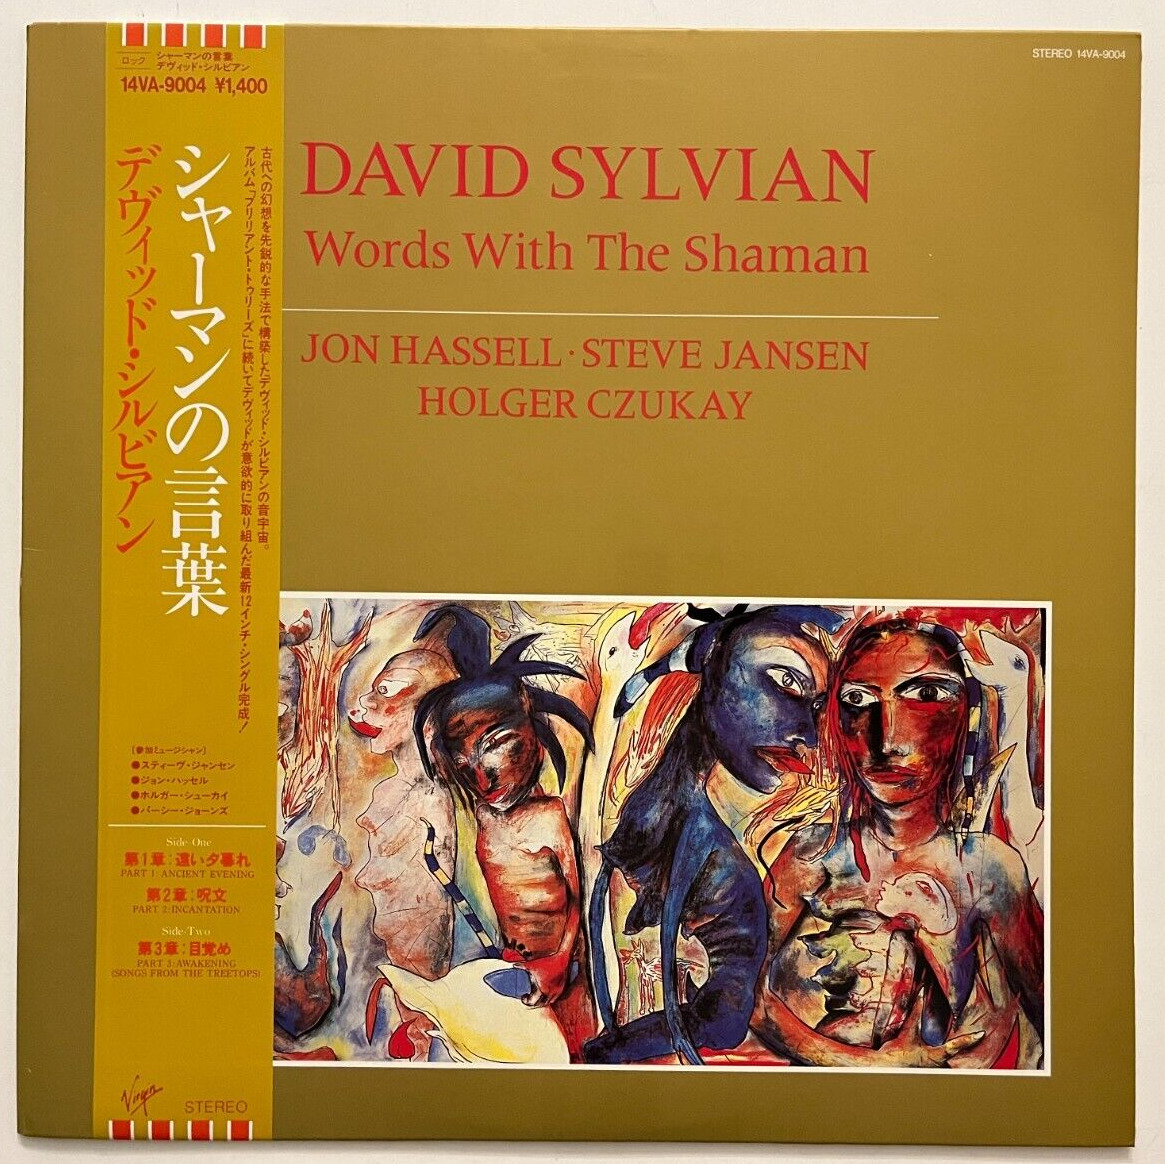 David Sylvian - Words With The Shaman - Vinyl JAPAN with OBI - 14VA-9004